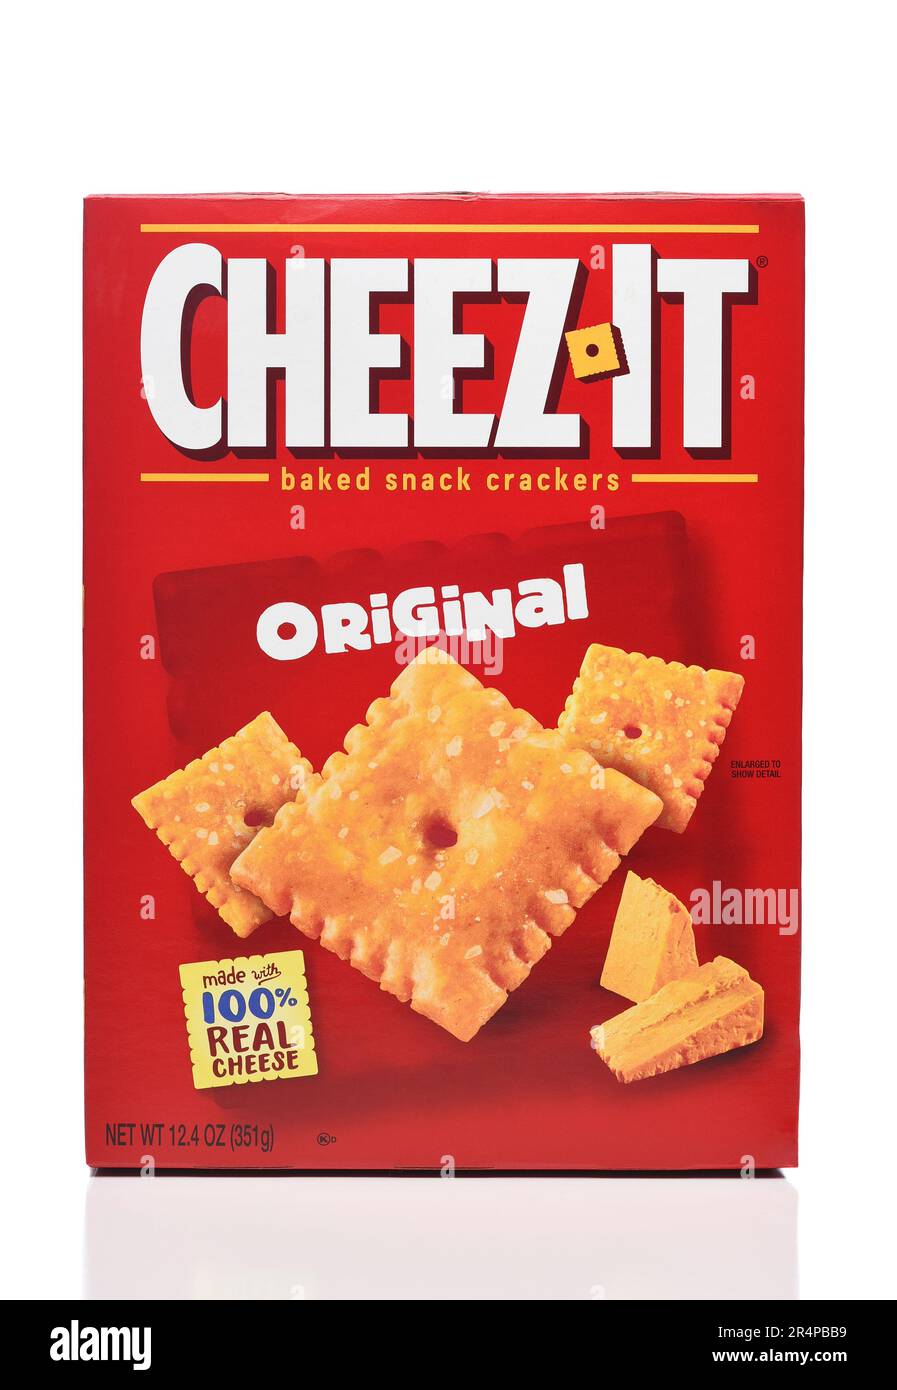 IRIVNE, CALIFORNIA - 29 MAY 20223: A box of Cheeze-it Original Snack Crackers. Stock Photo